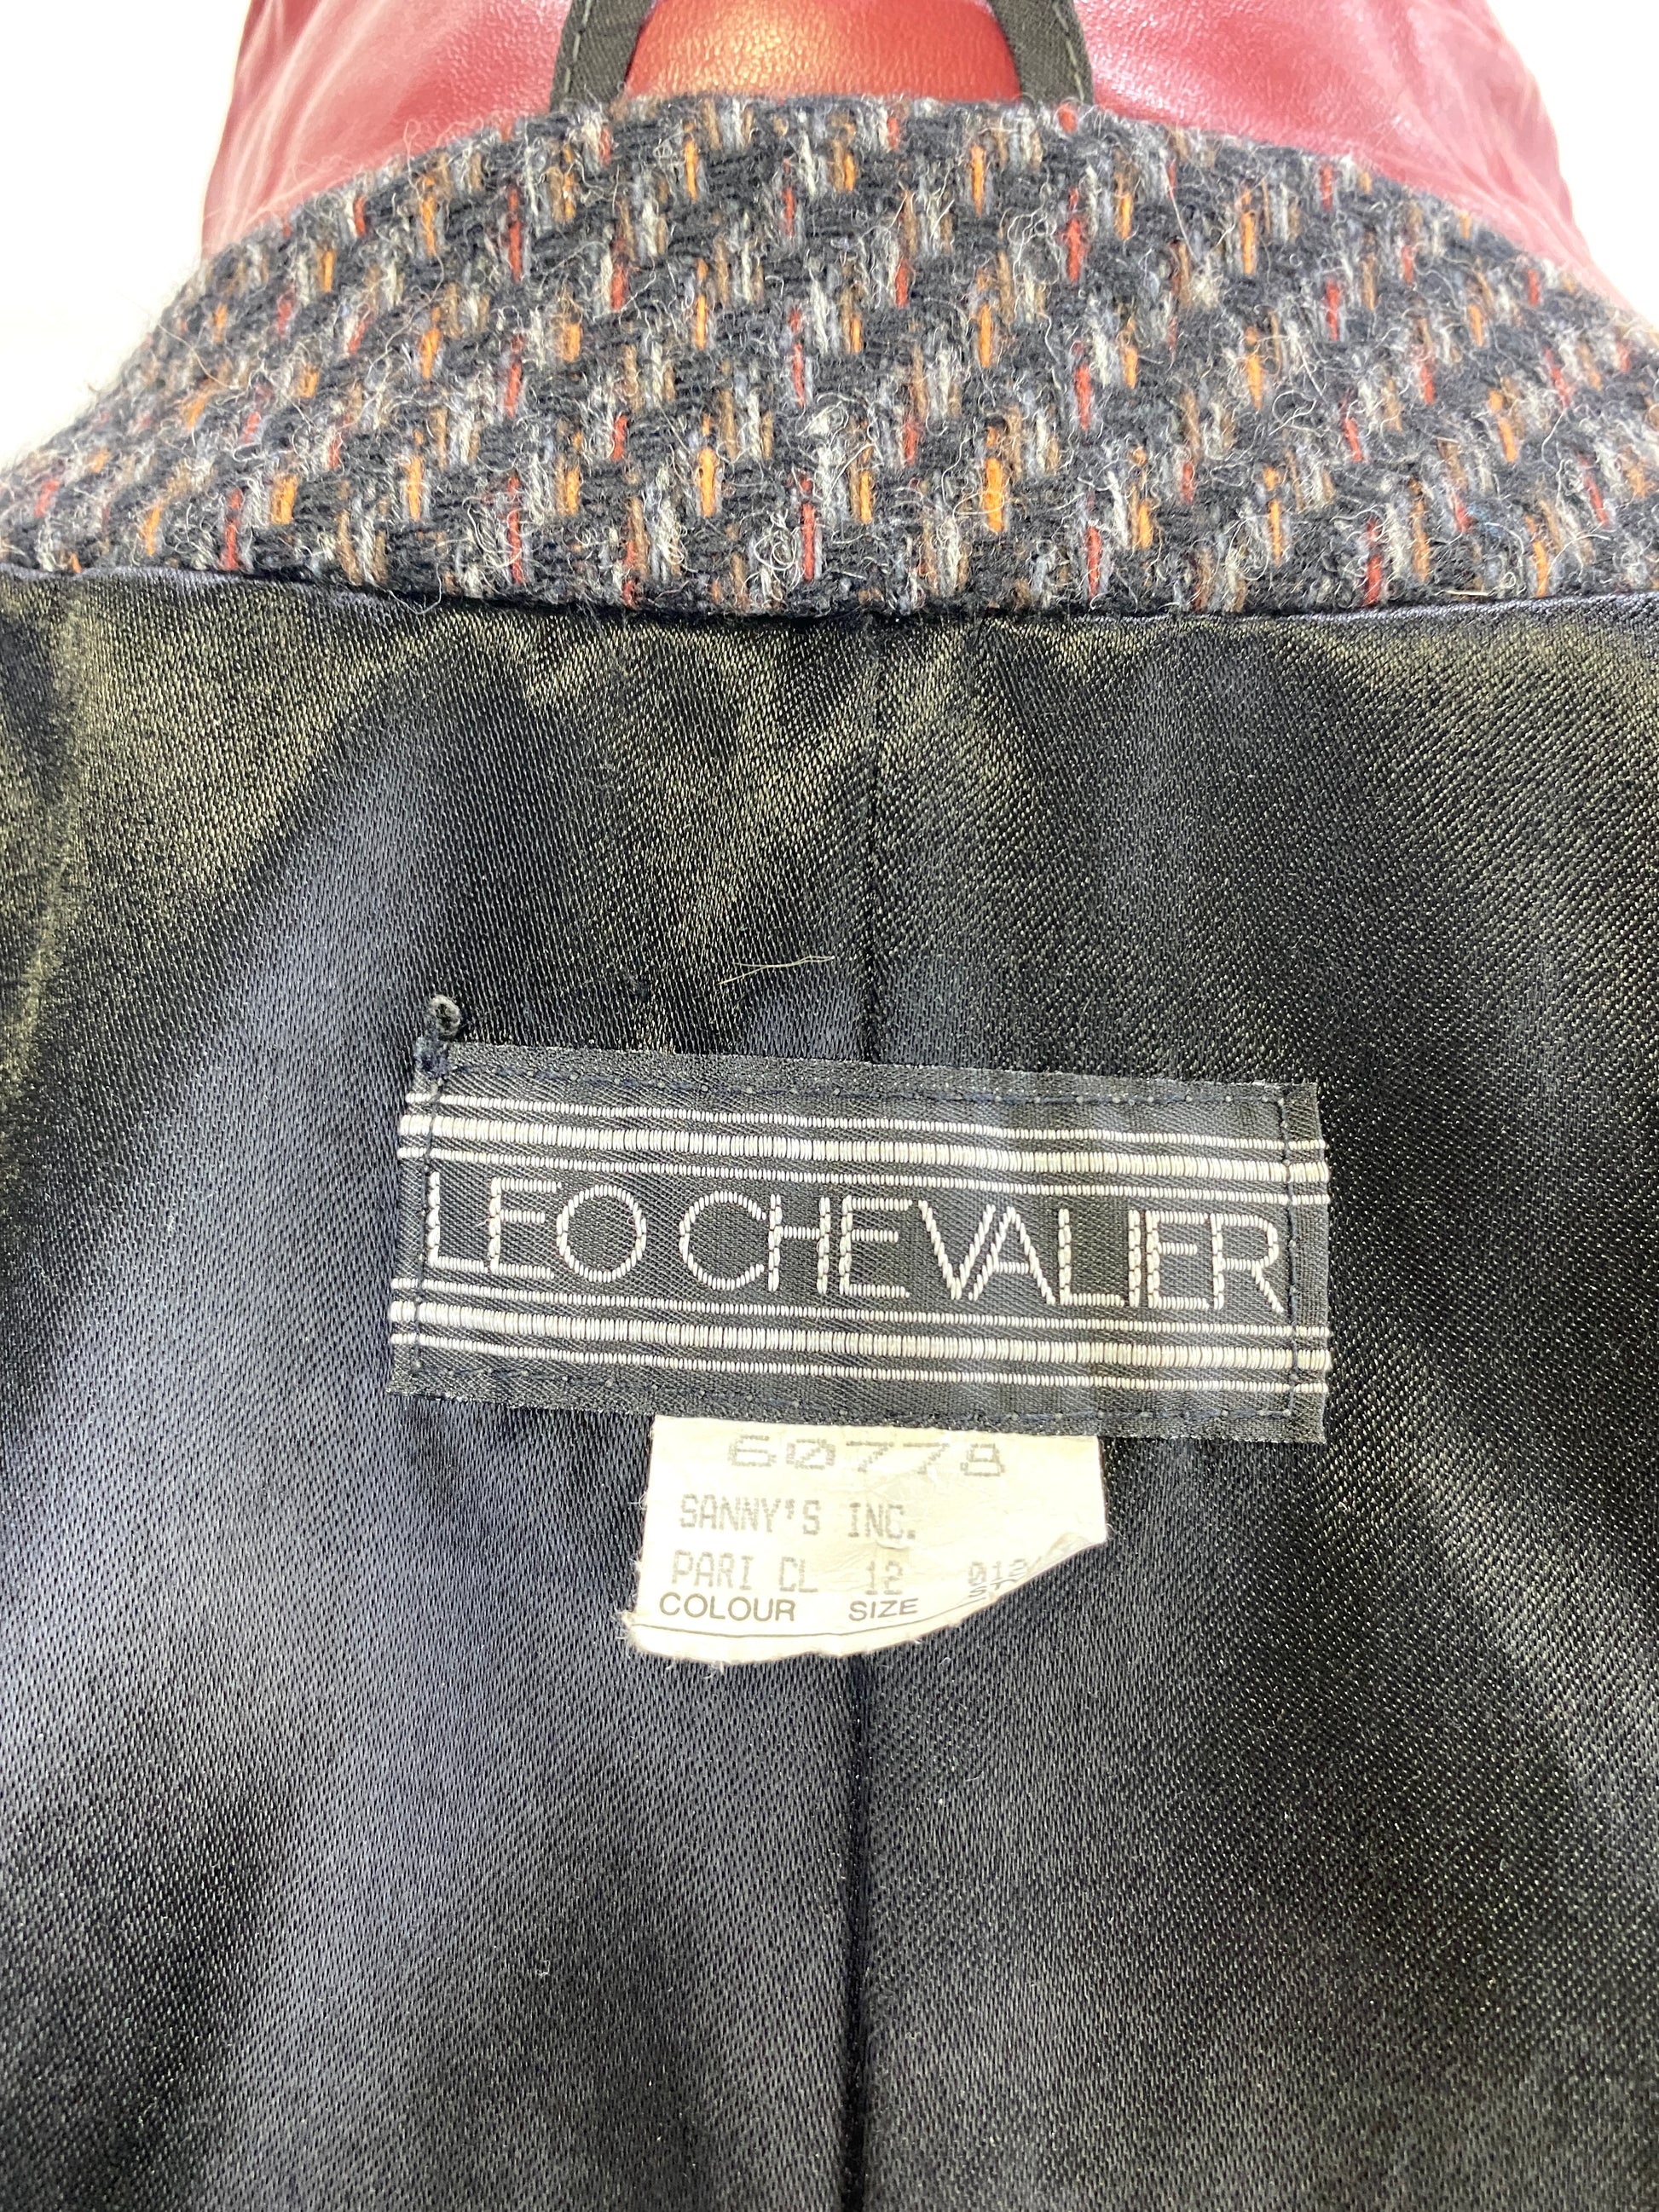 Vintage 1980s Men's Black Tweed Bomber Jacket with Leather Trim, Leo Chevalier 